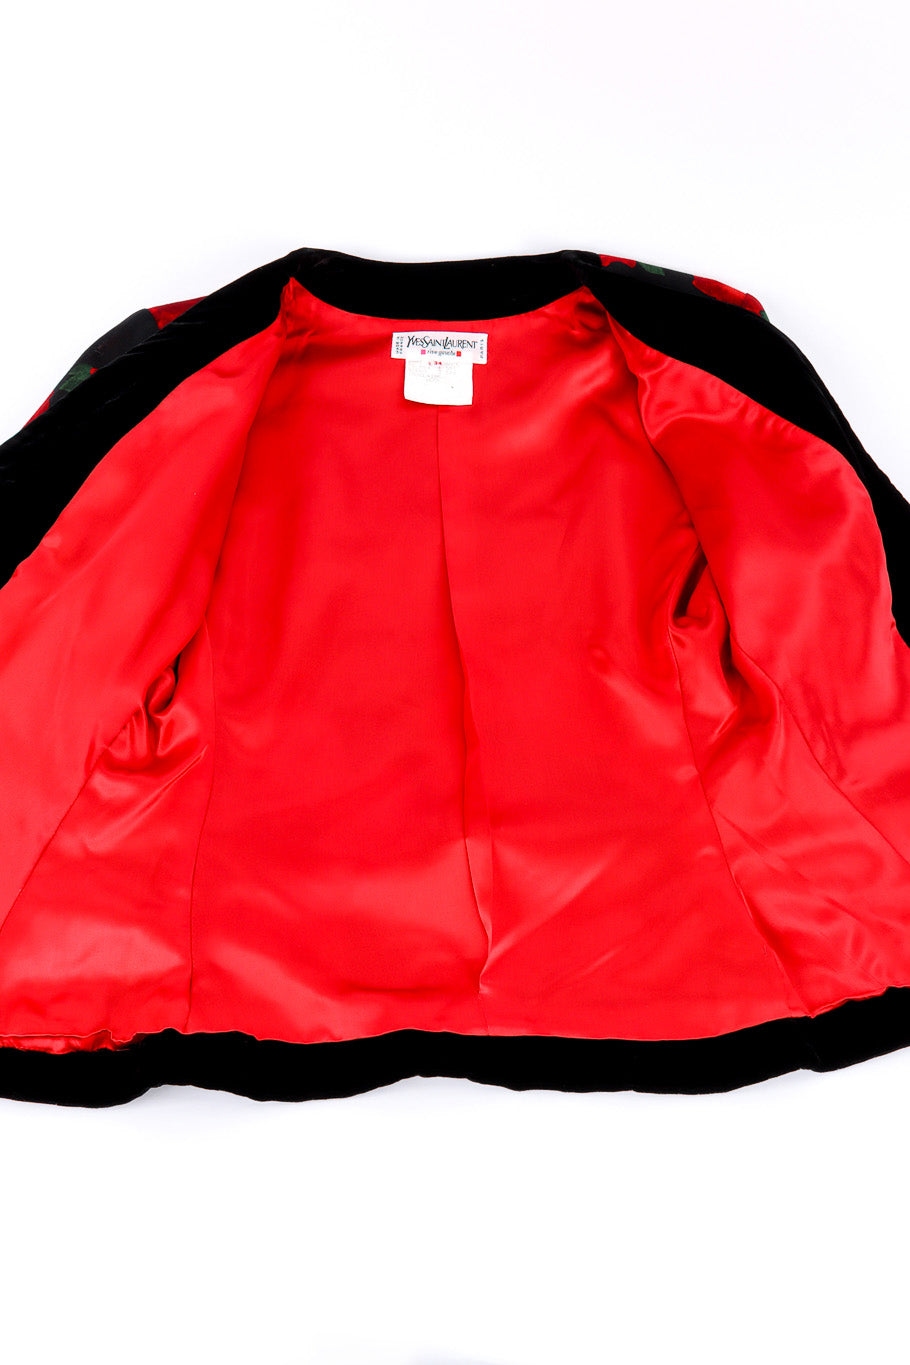 Vintage Yves Saint Laurent Rose Velvet Trim Jacket view of lining @recessla